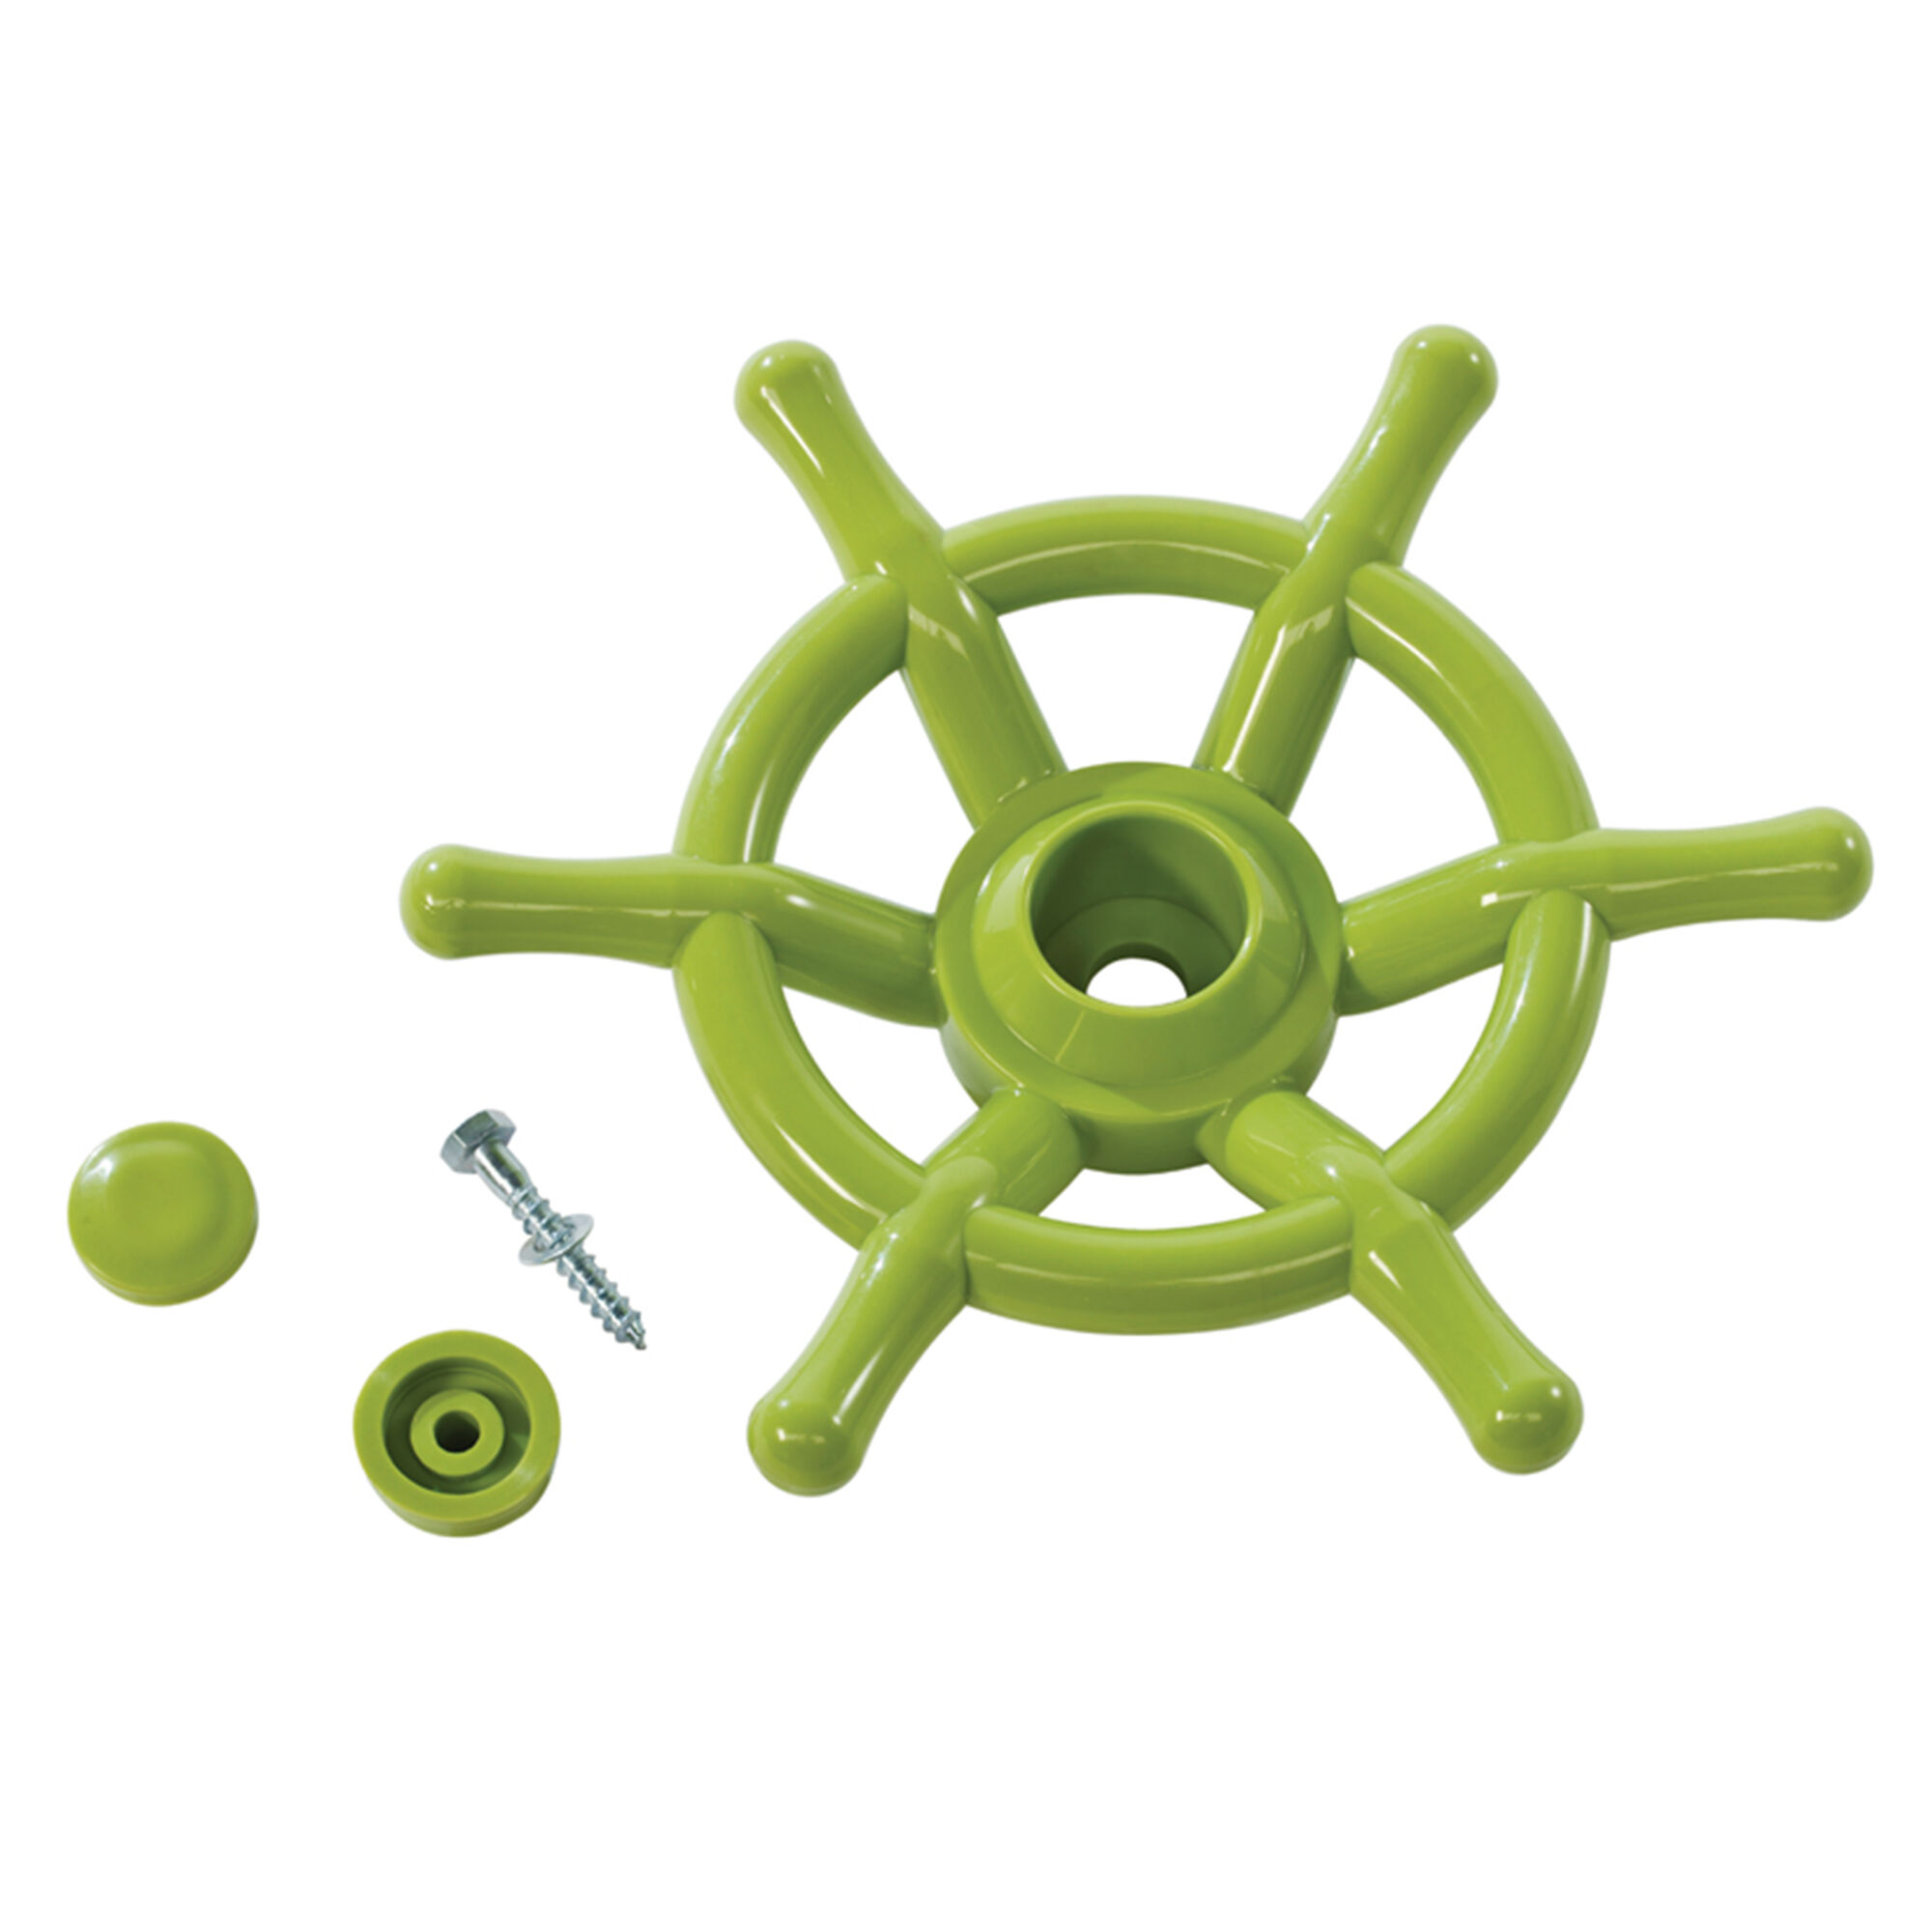 AXI Gouvernail jouet enfant - Vert Citron